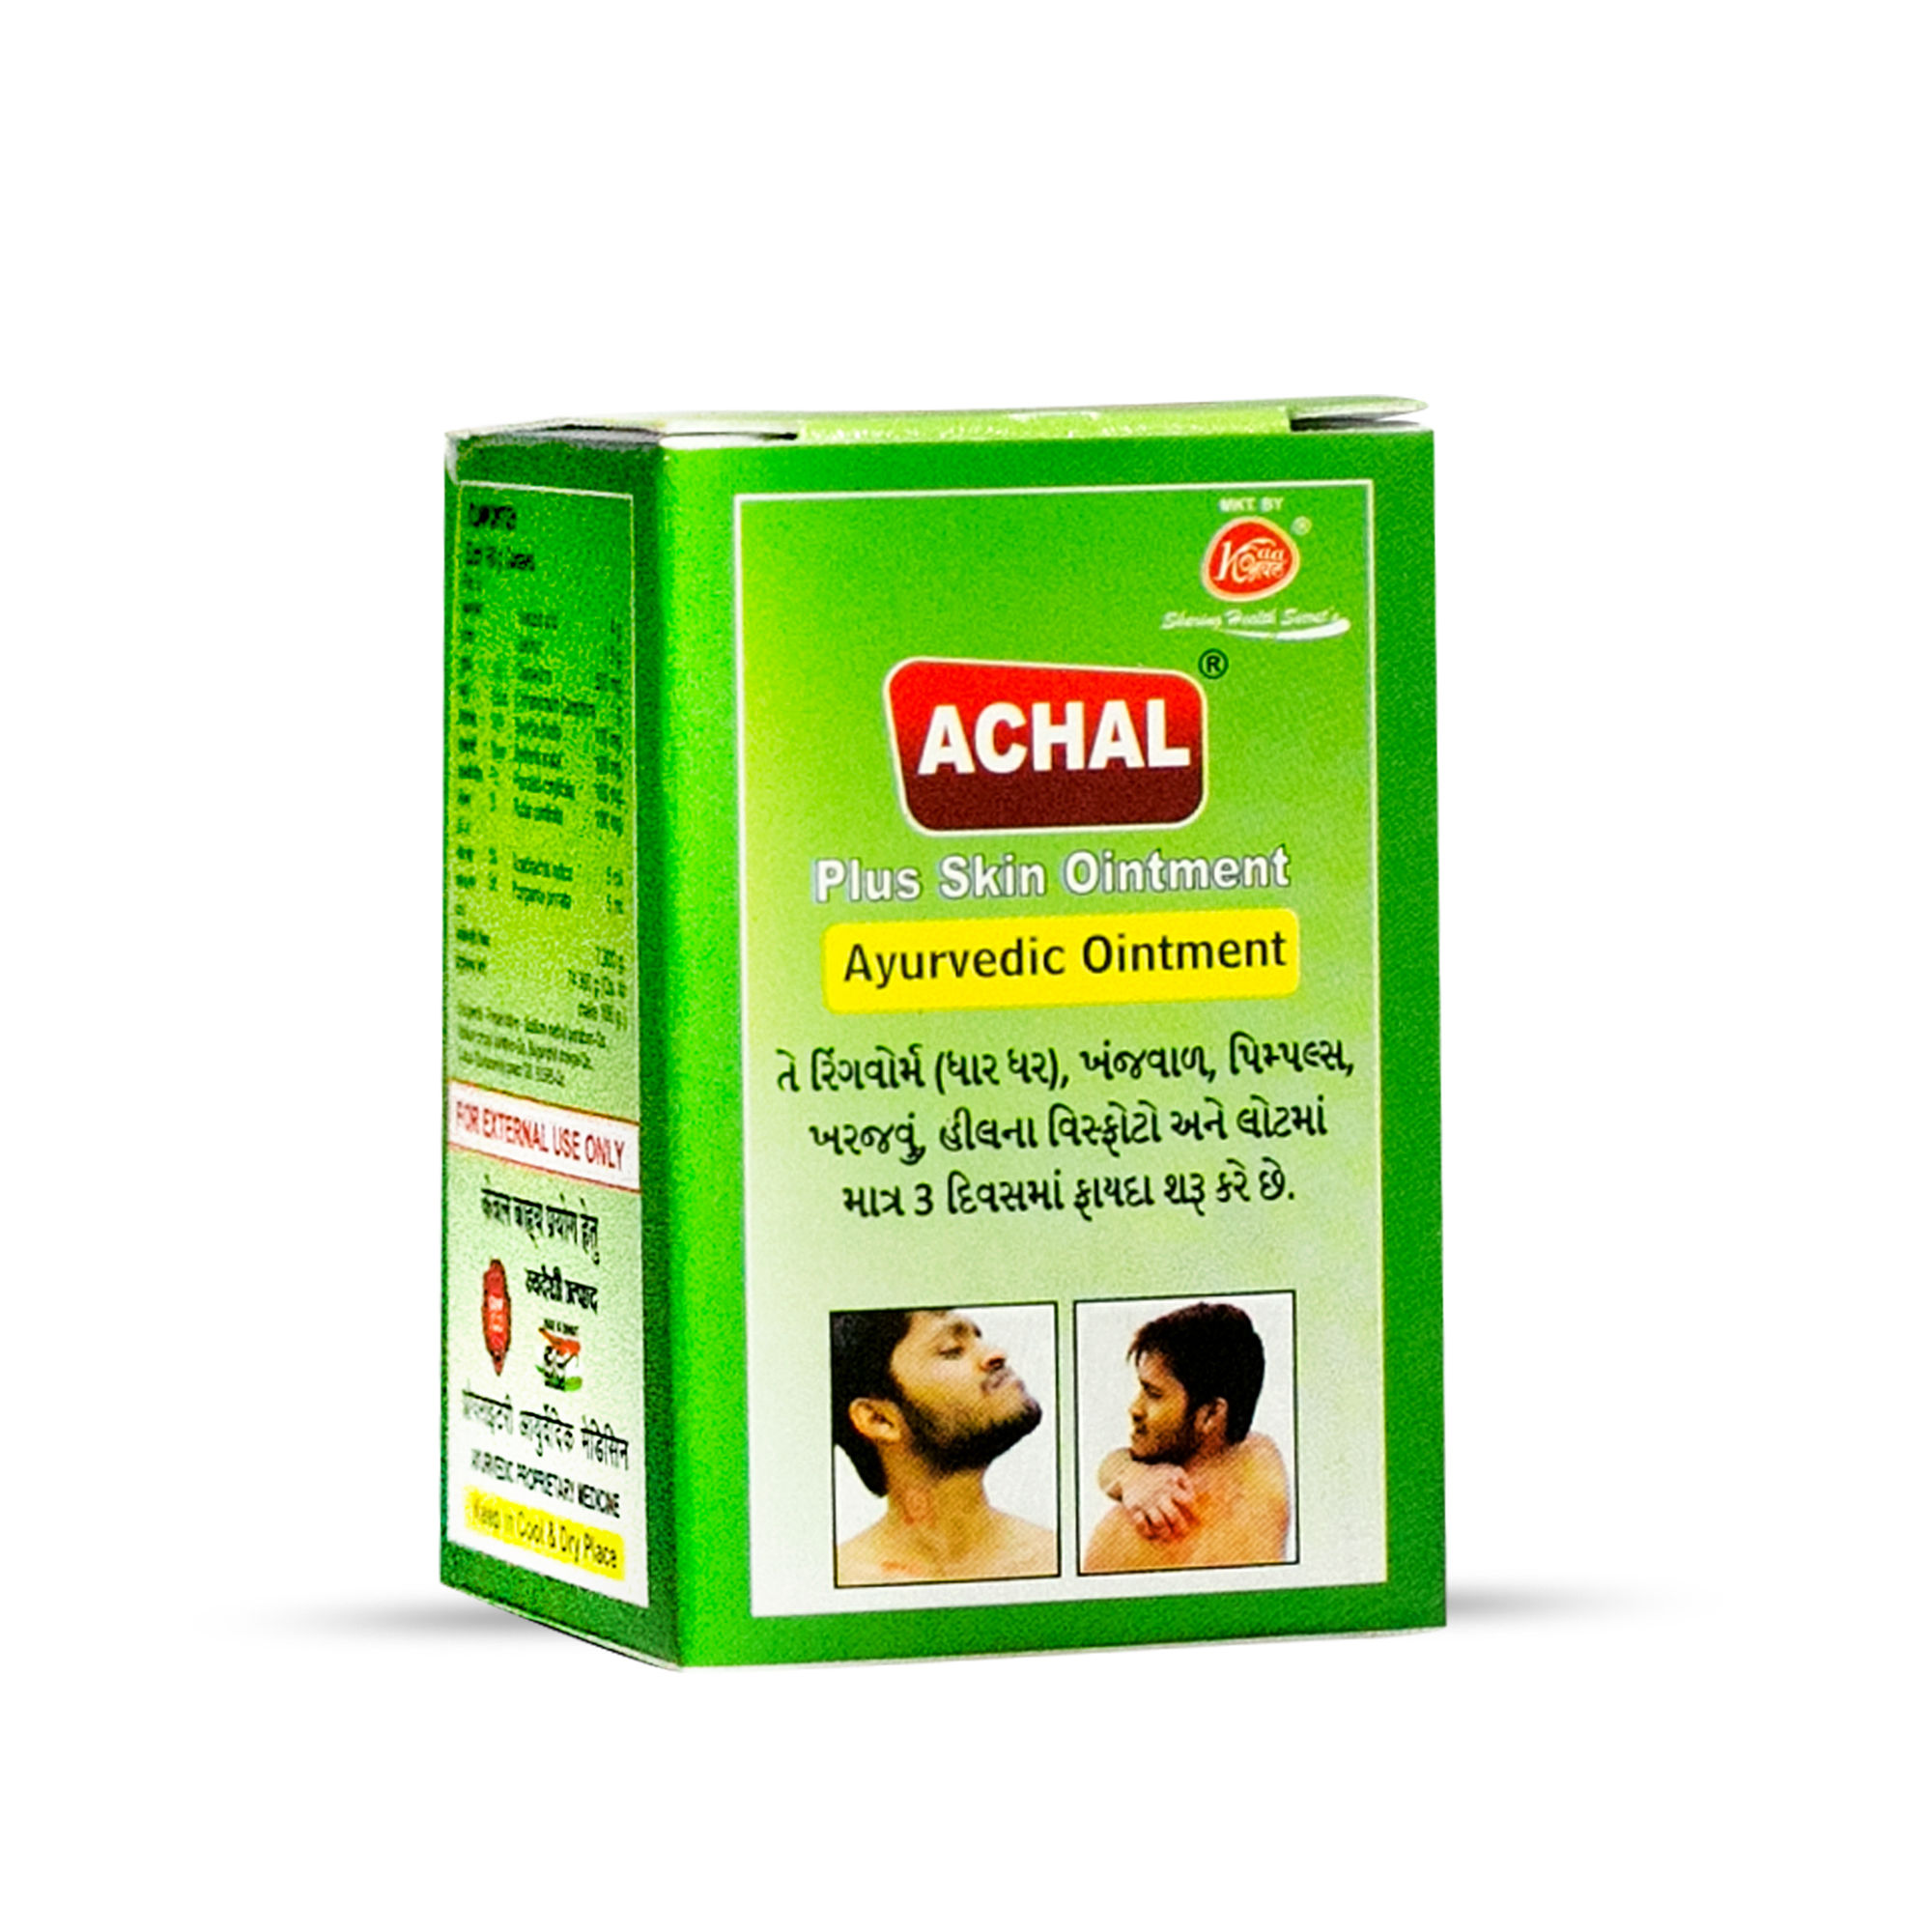 Achal Plus Skin Ointment